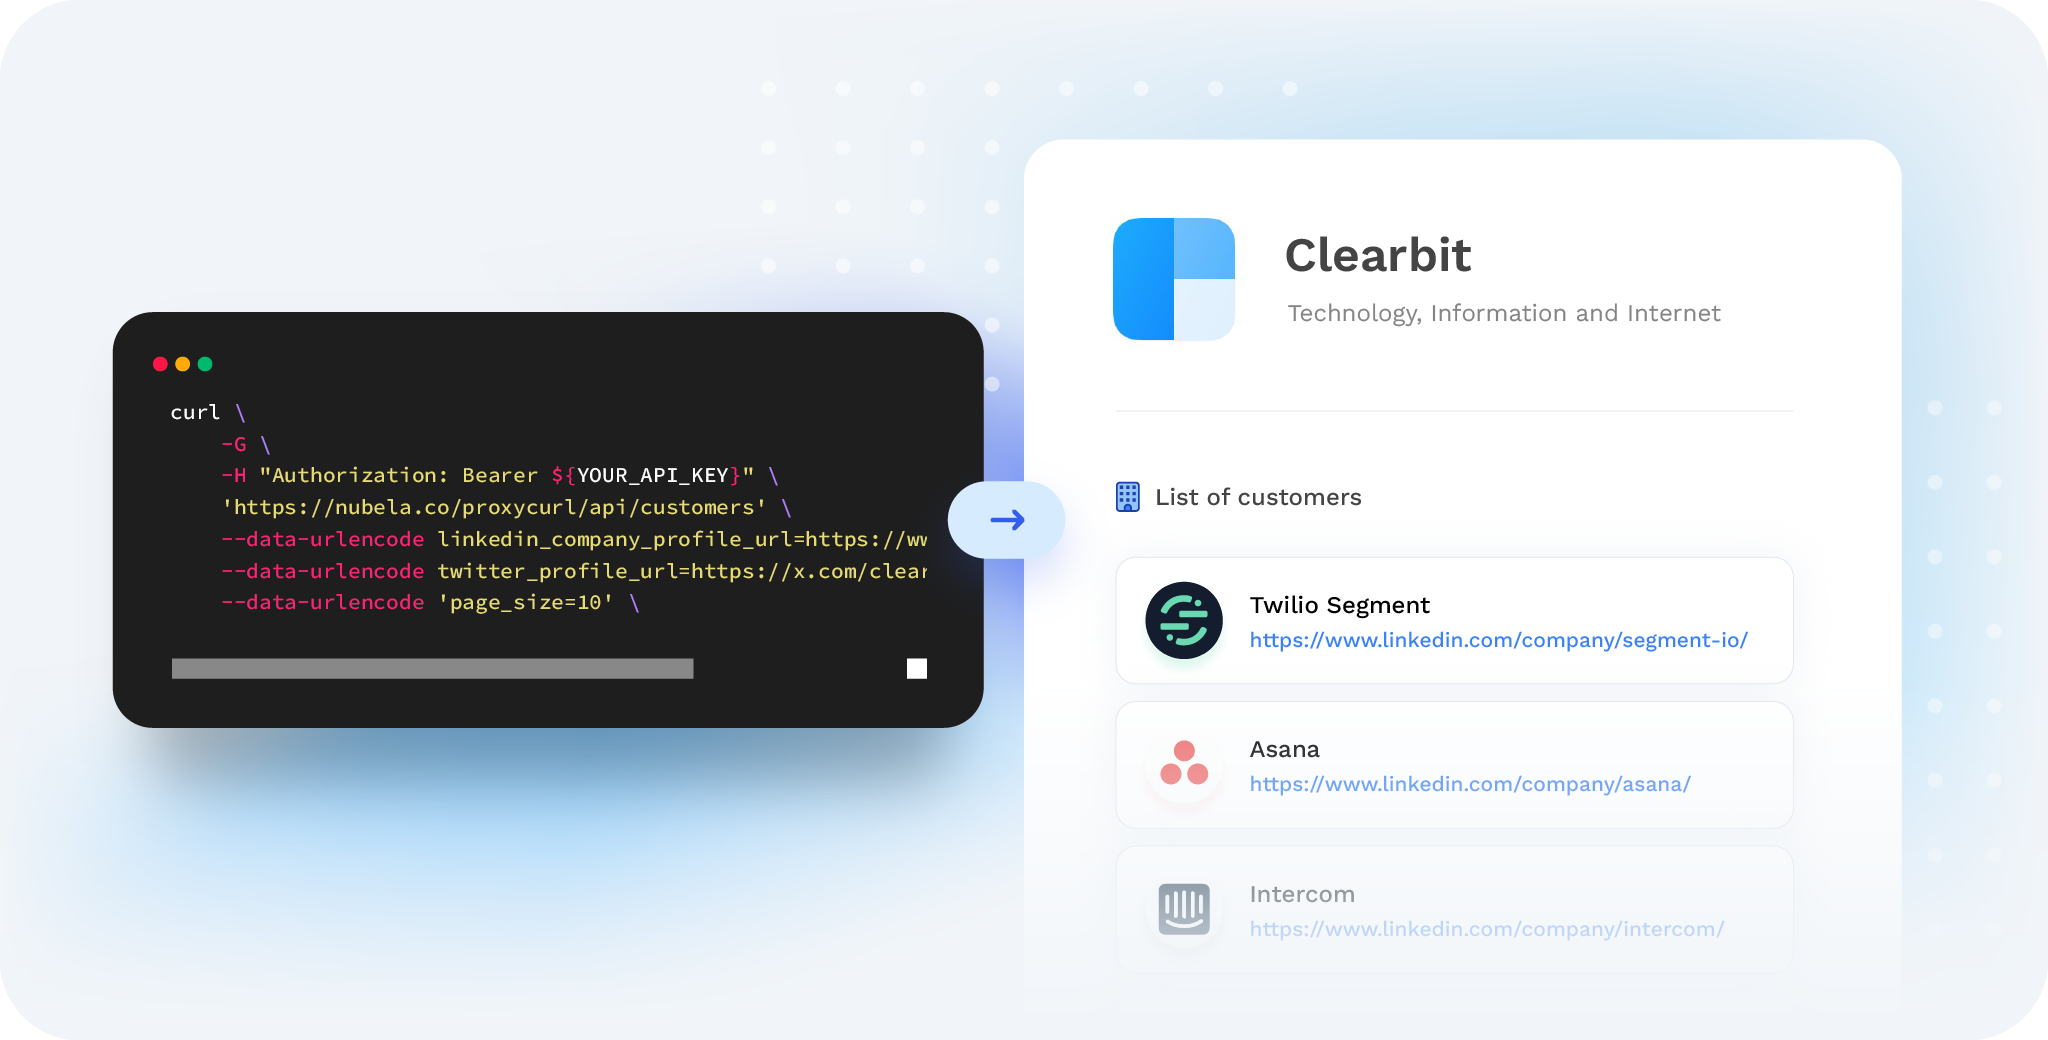 Clearbit's customers